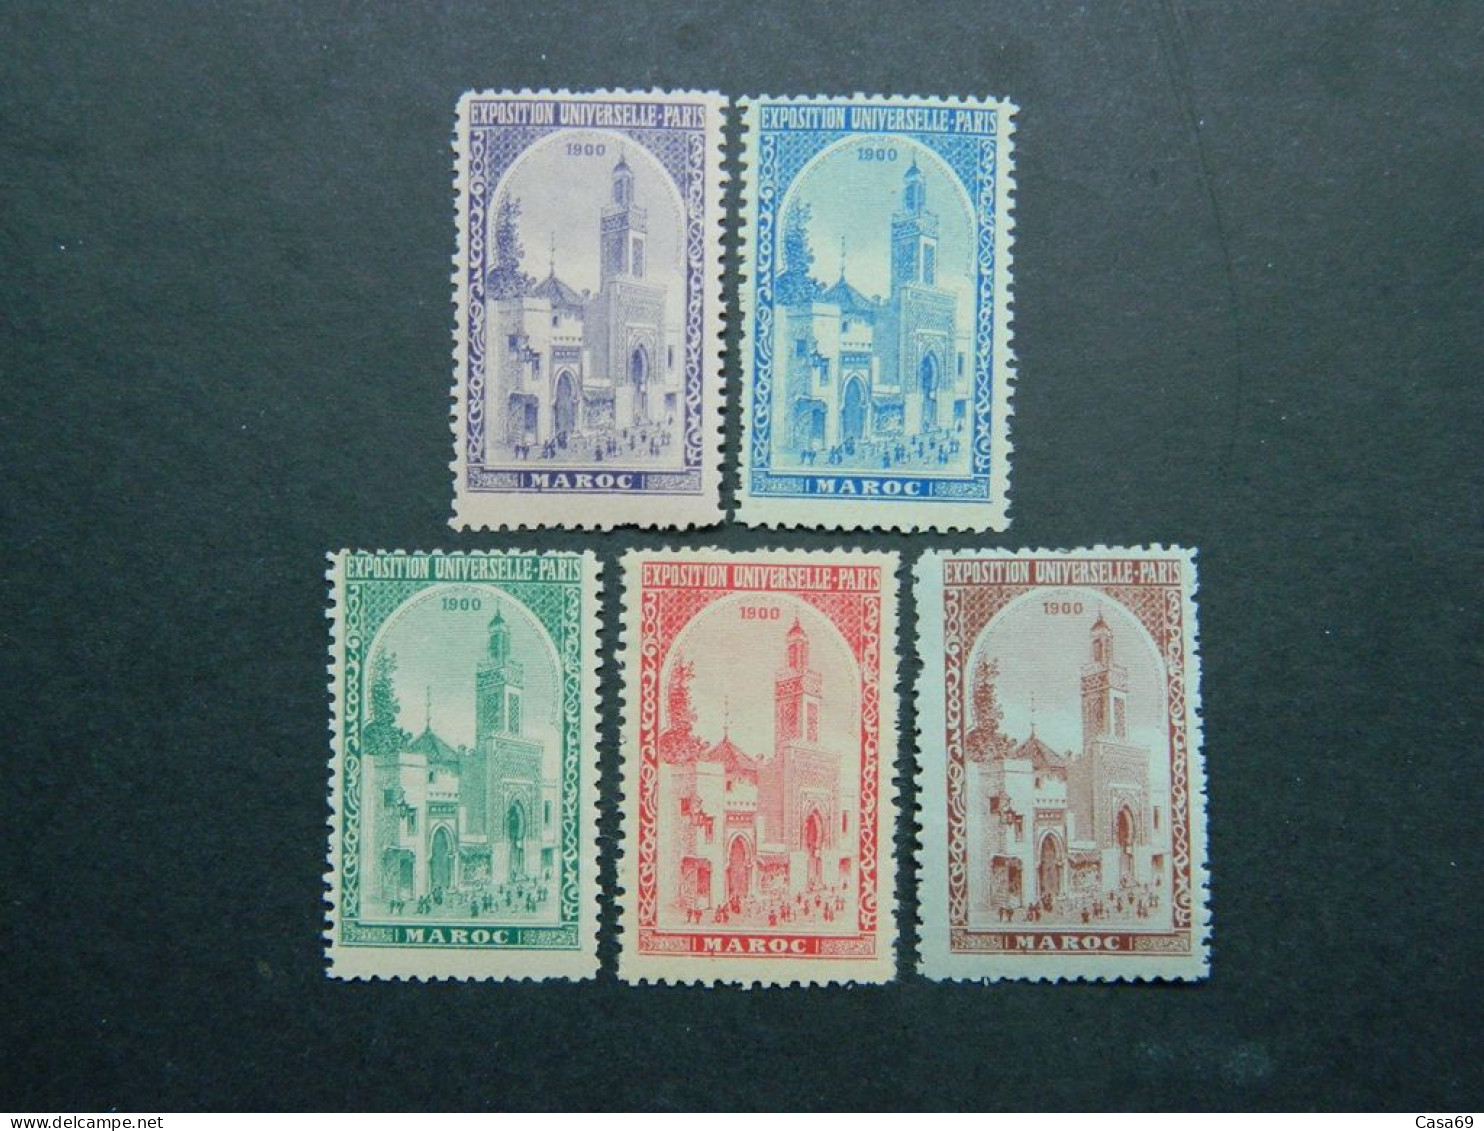 Vignettes Exposition Universelle Paris 1900 Maroc Poster Stamps Universal Exhibition Morocco - Erinnophilie